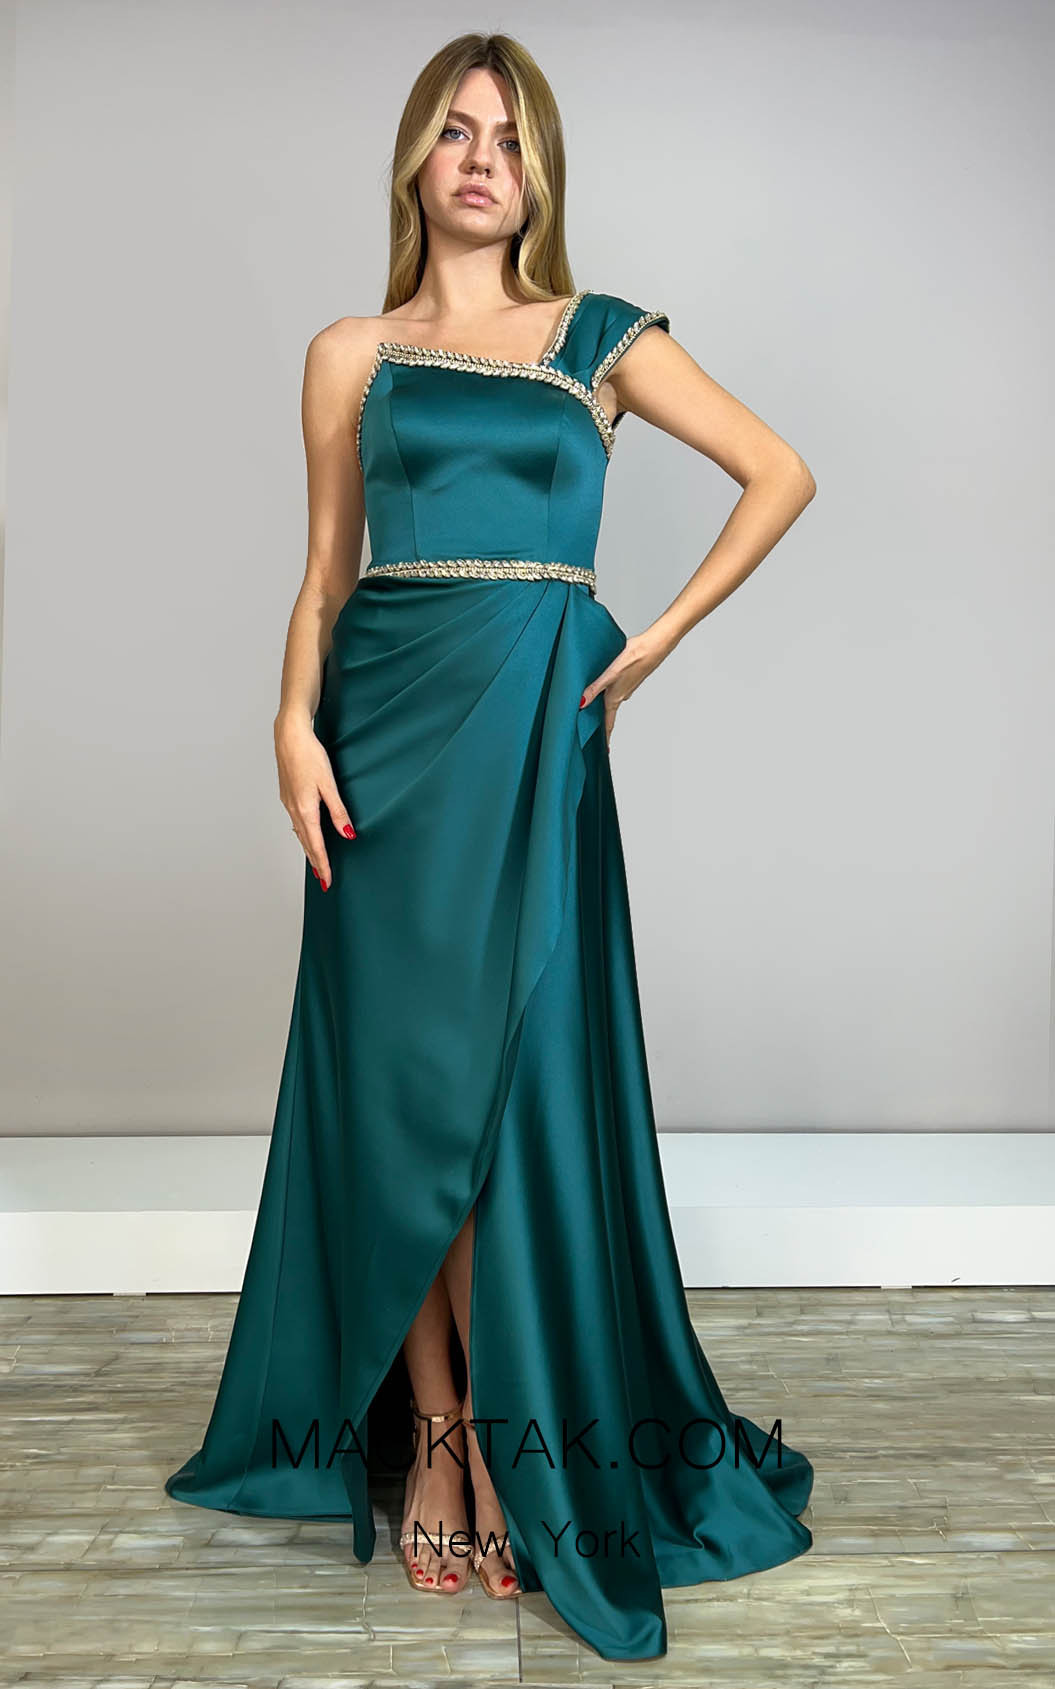 MackTak Collection 4492 Dress